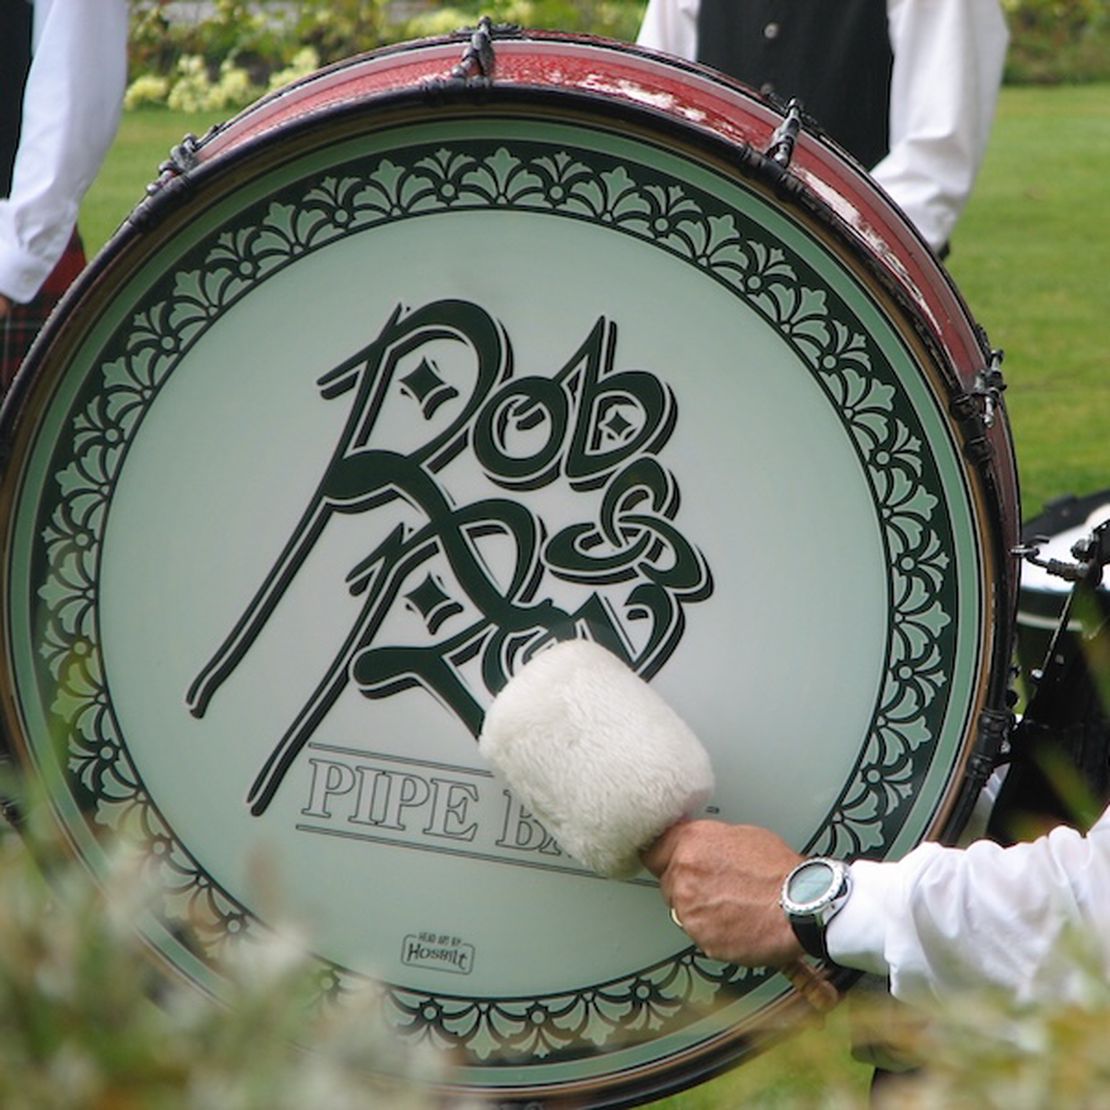 Rob Roy Pipe Band